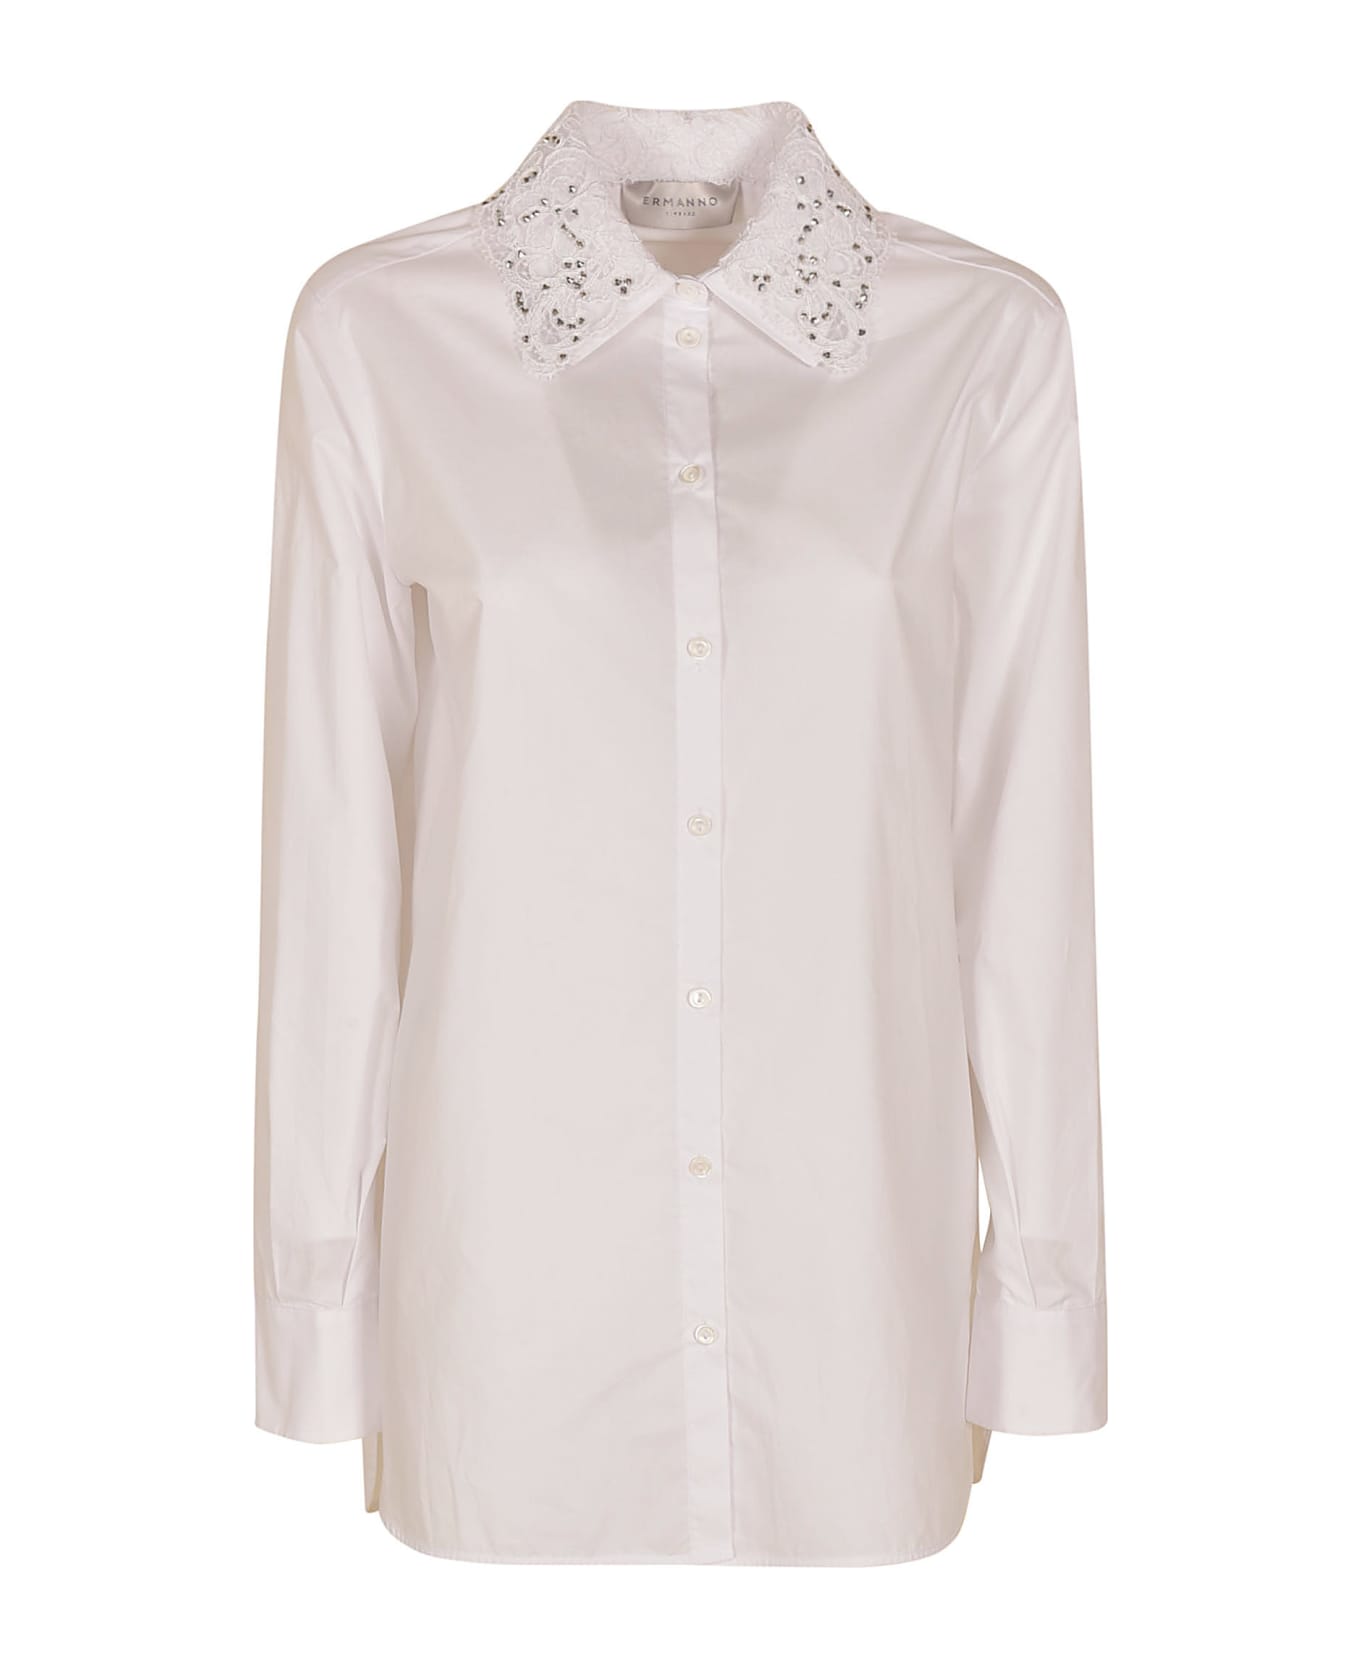 Ermanno Scervino Embellished Collar Plain Shirt - White シャツ